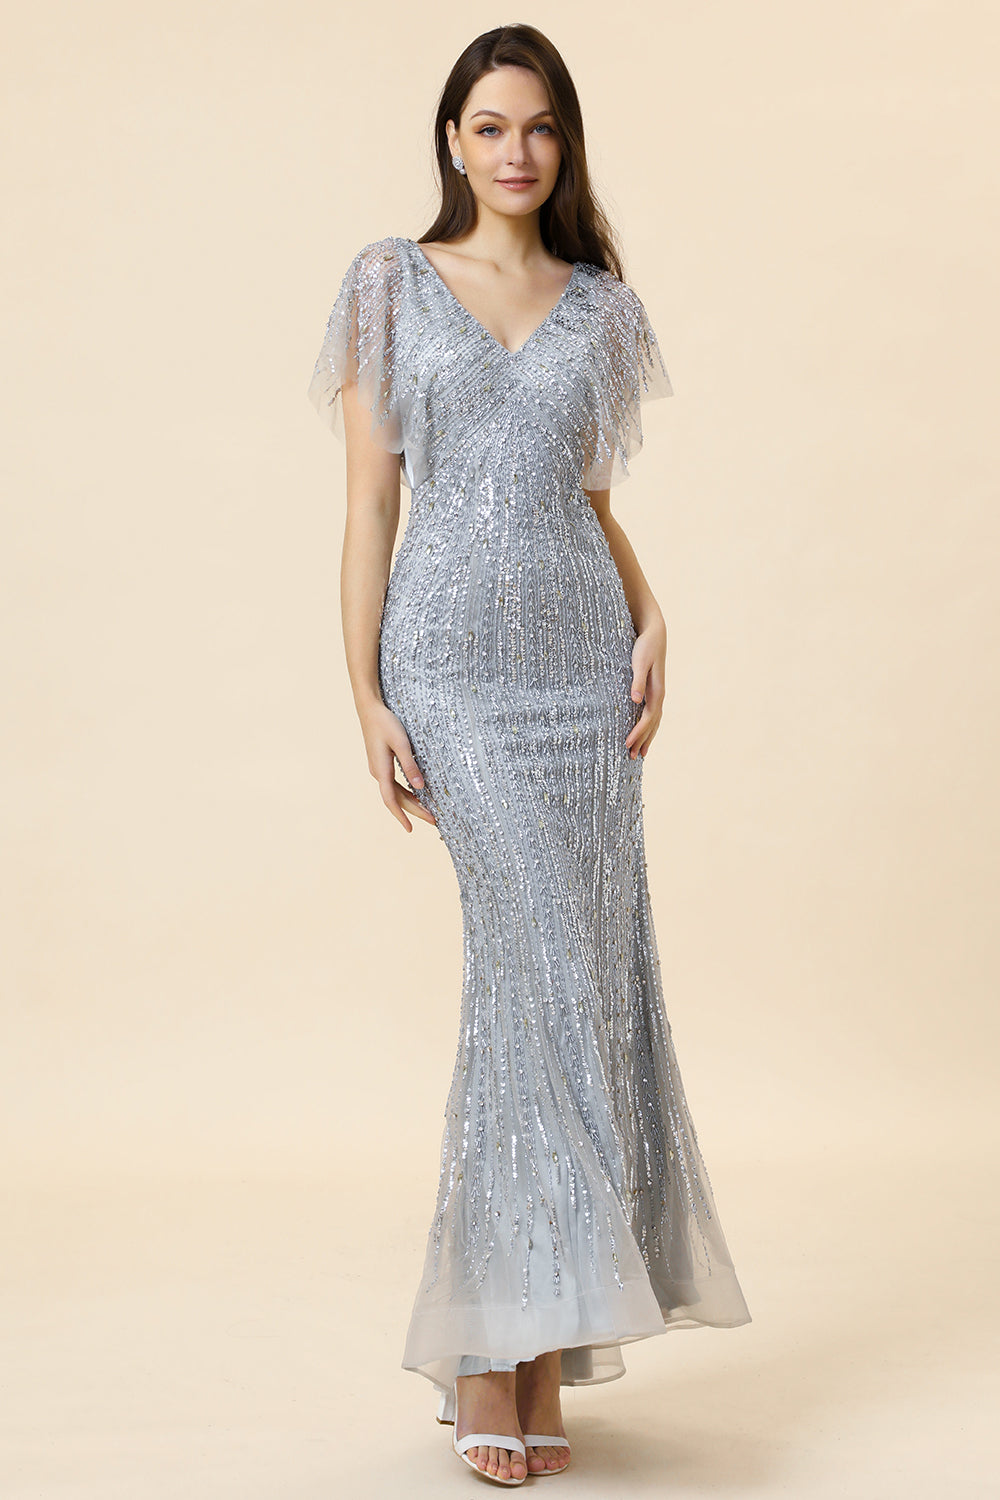 Sparkly Grey Beaded Mermaid Long Evening Dress